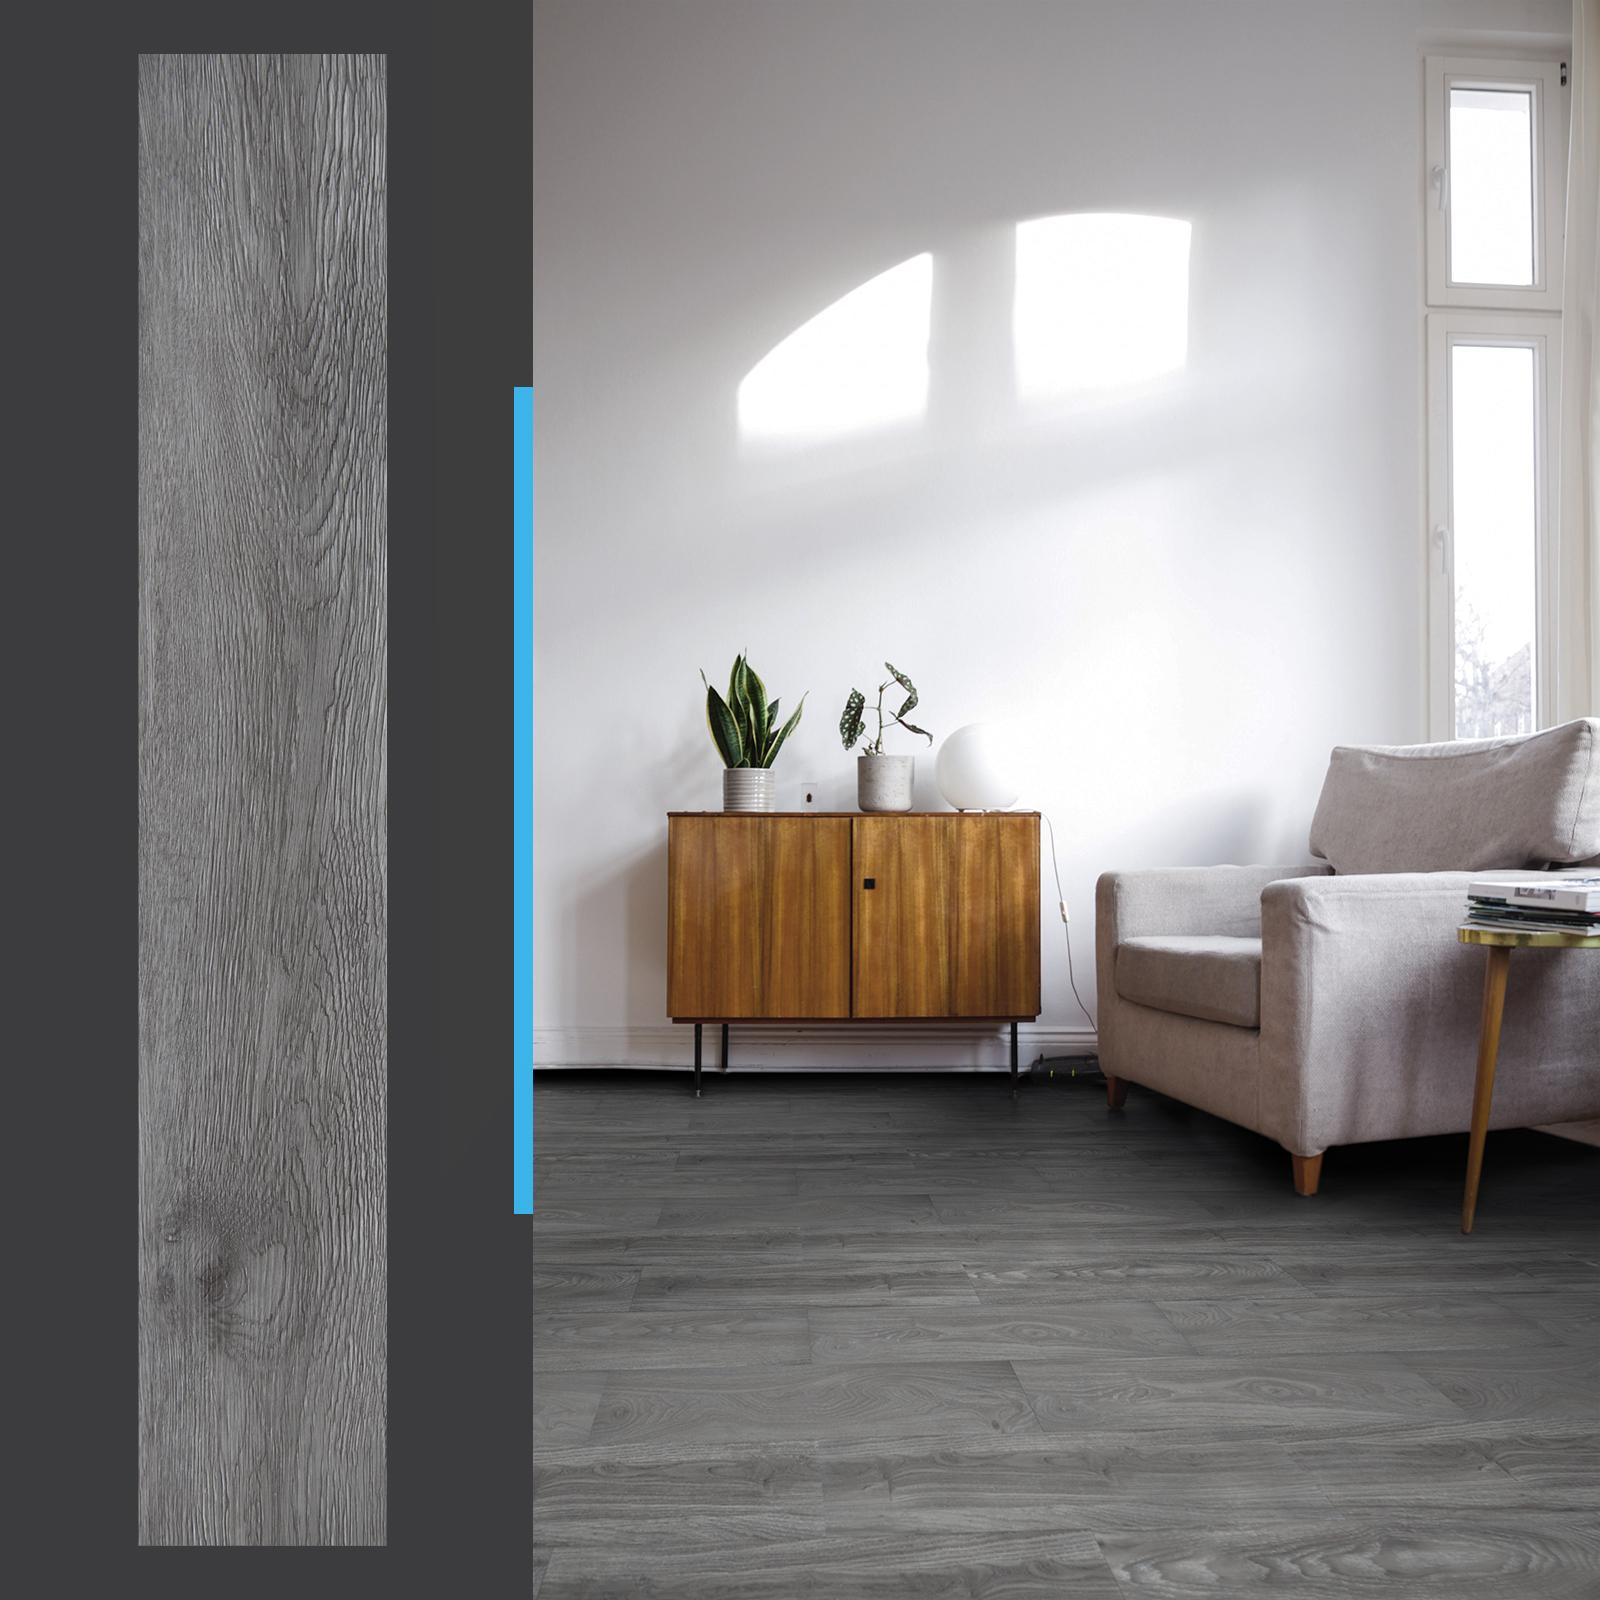 A43003 - Peel and Stick Floor Tile Vinyl Wood Plank 36-Pack 54 Sq.Ft,Rigid Surface Hard Core,Easy DIY Self-Adhesive Flooring